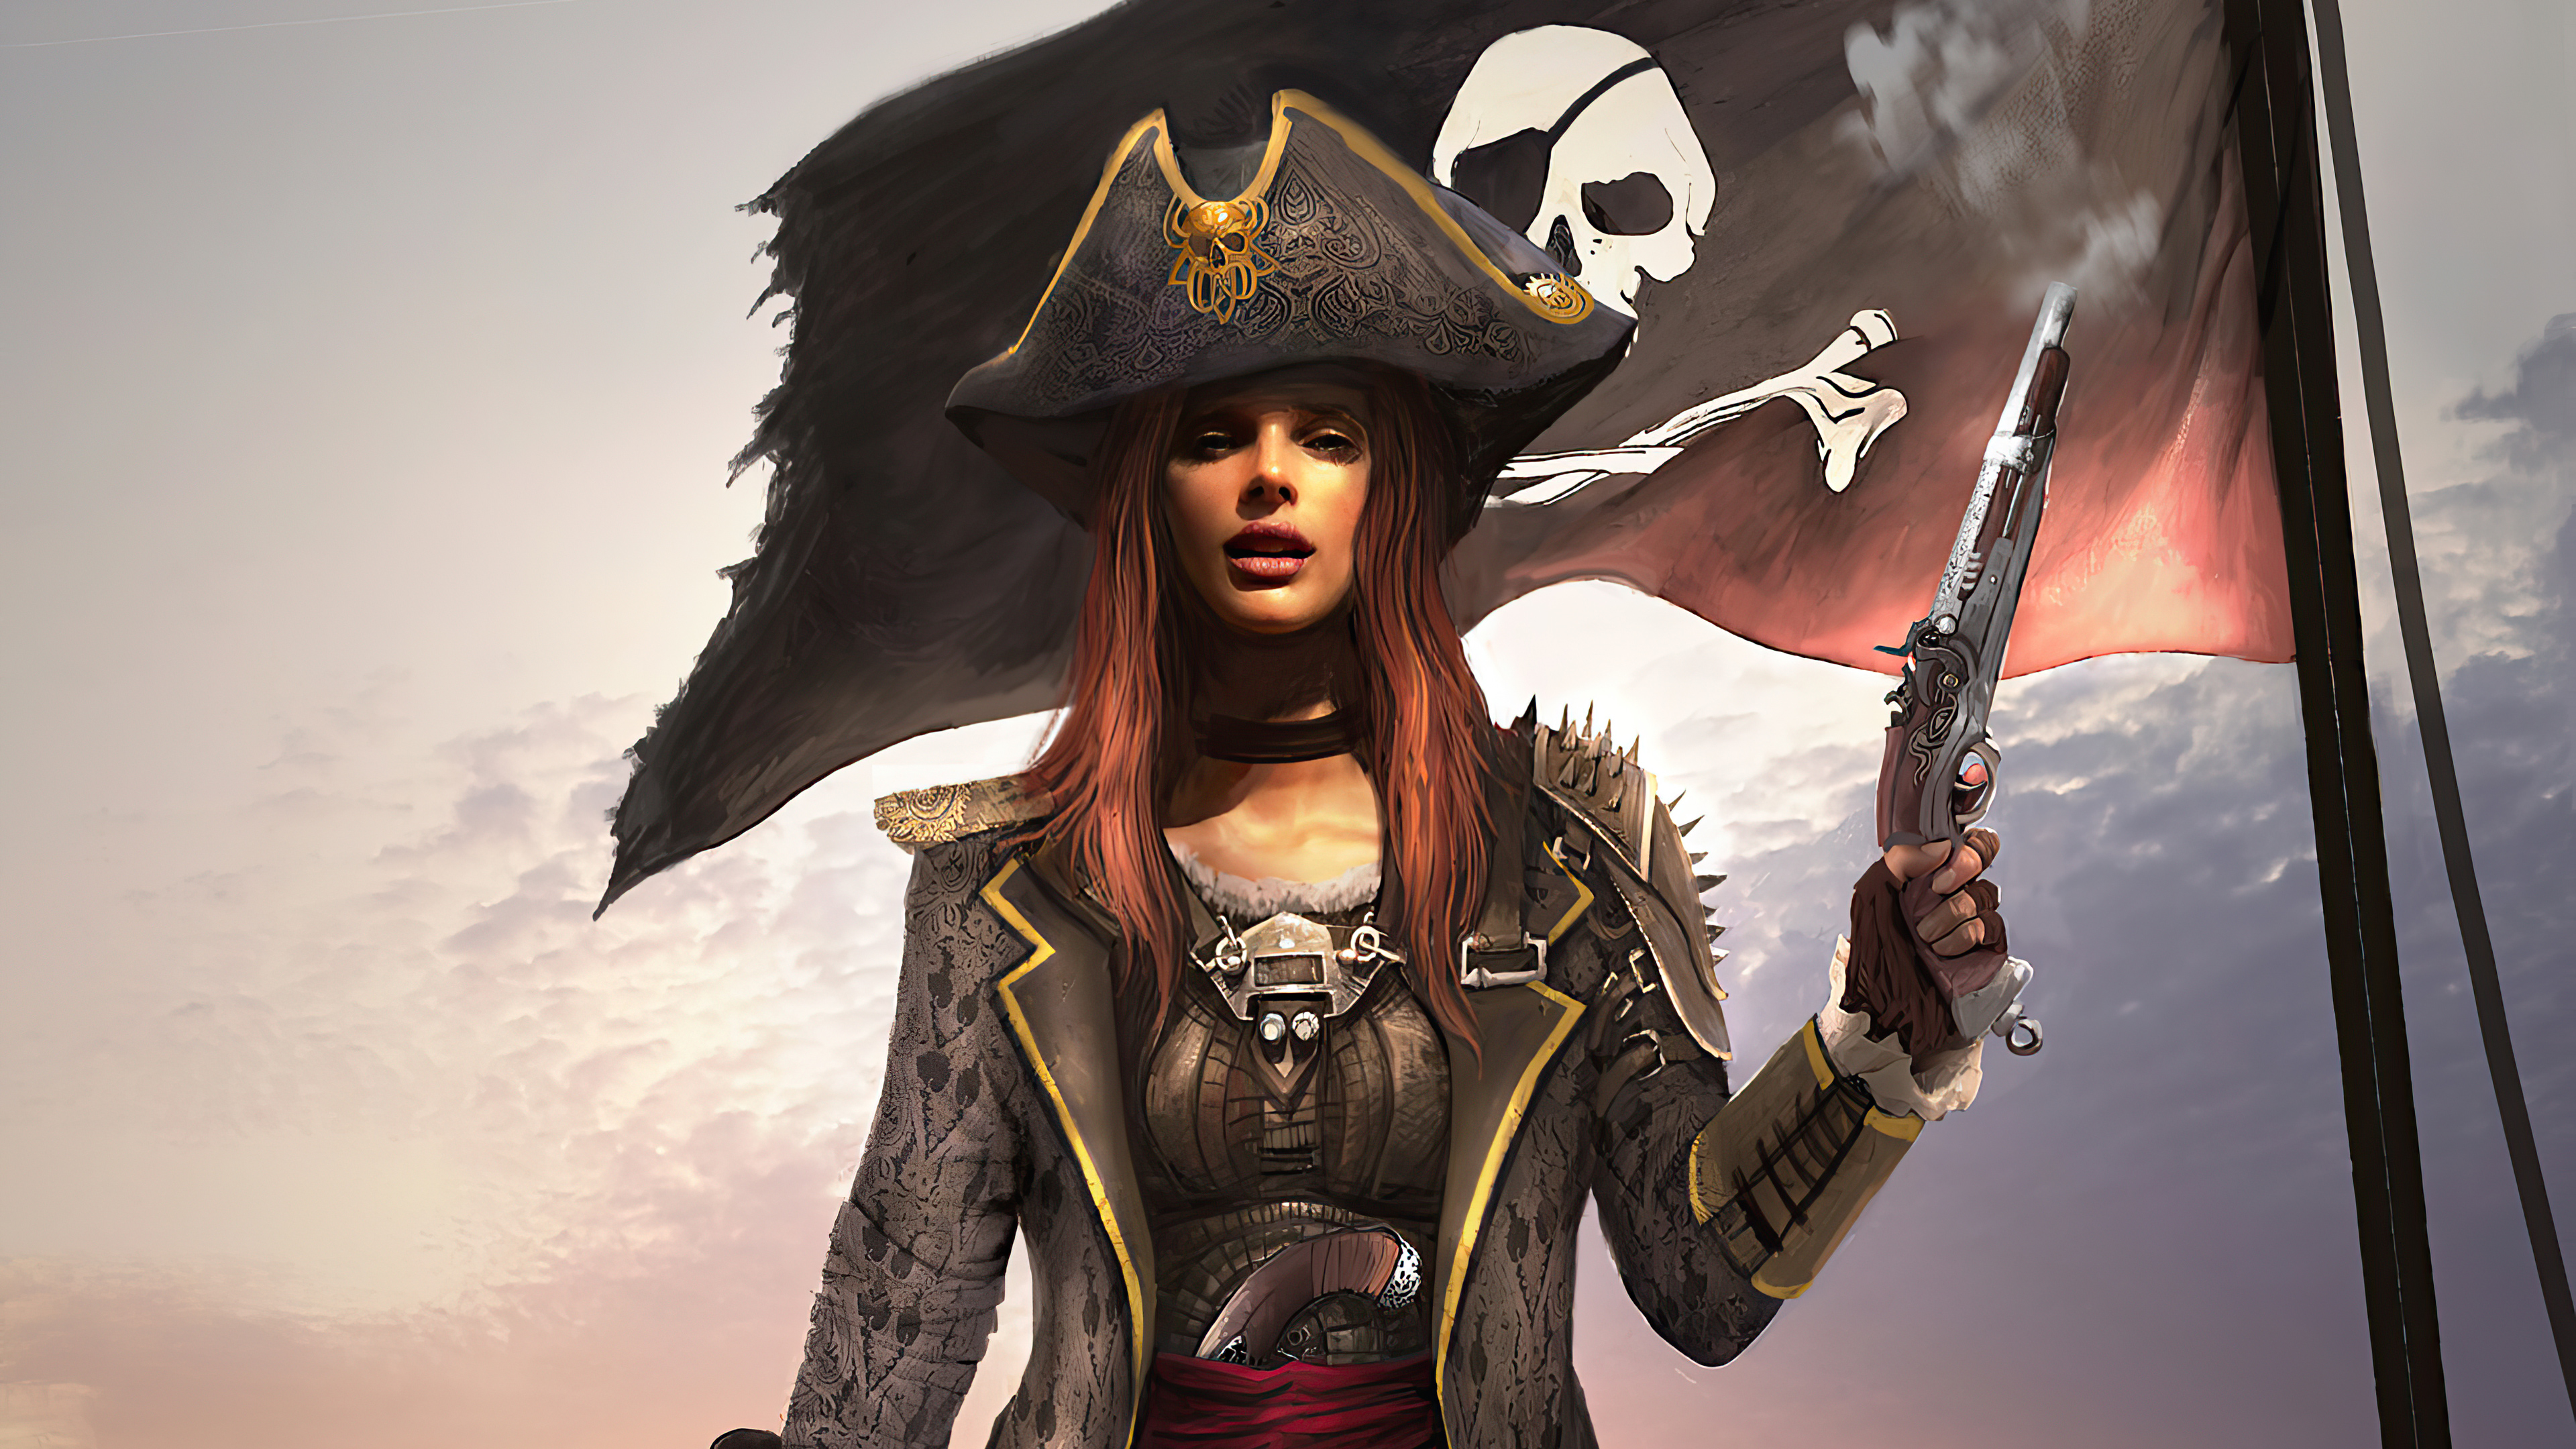 Descarga gratuita de fondo de pantalla para móvil de Fantasía, Sombrero, Pirata, Pistola, Mujer Guerrera.